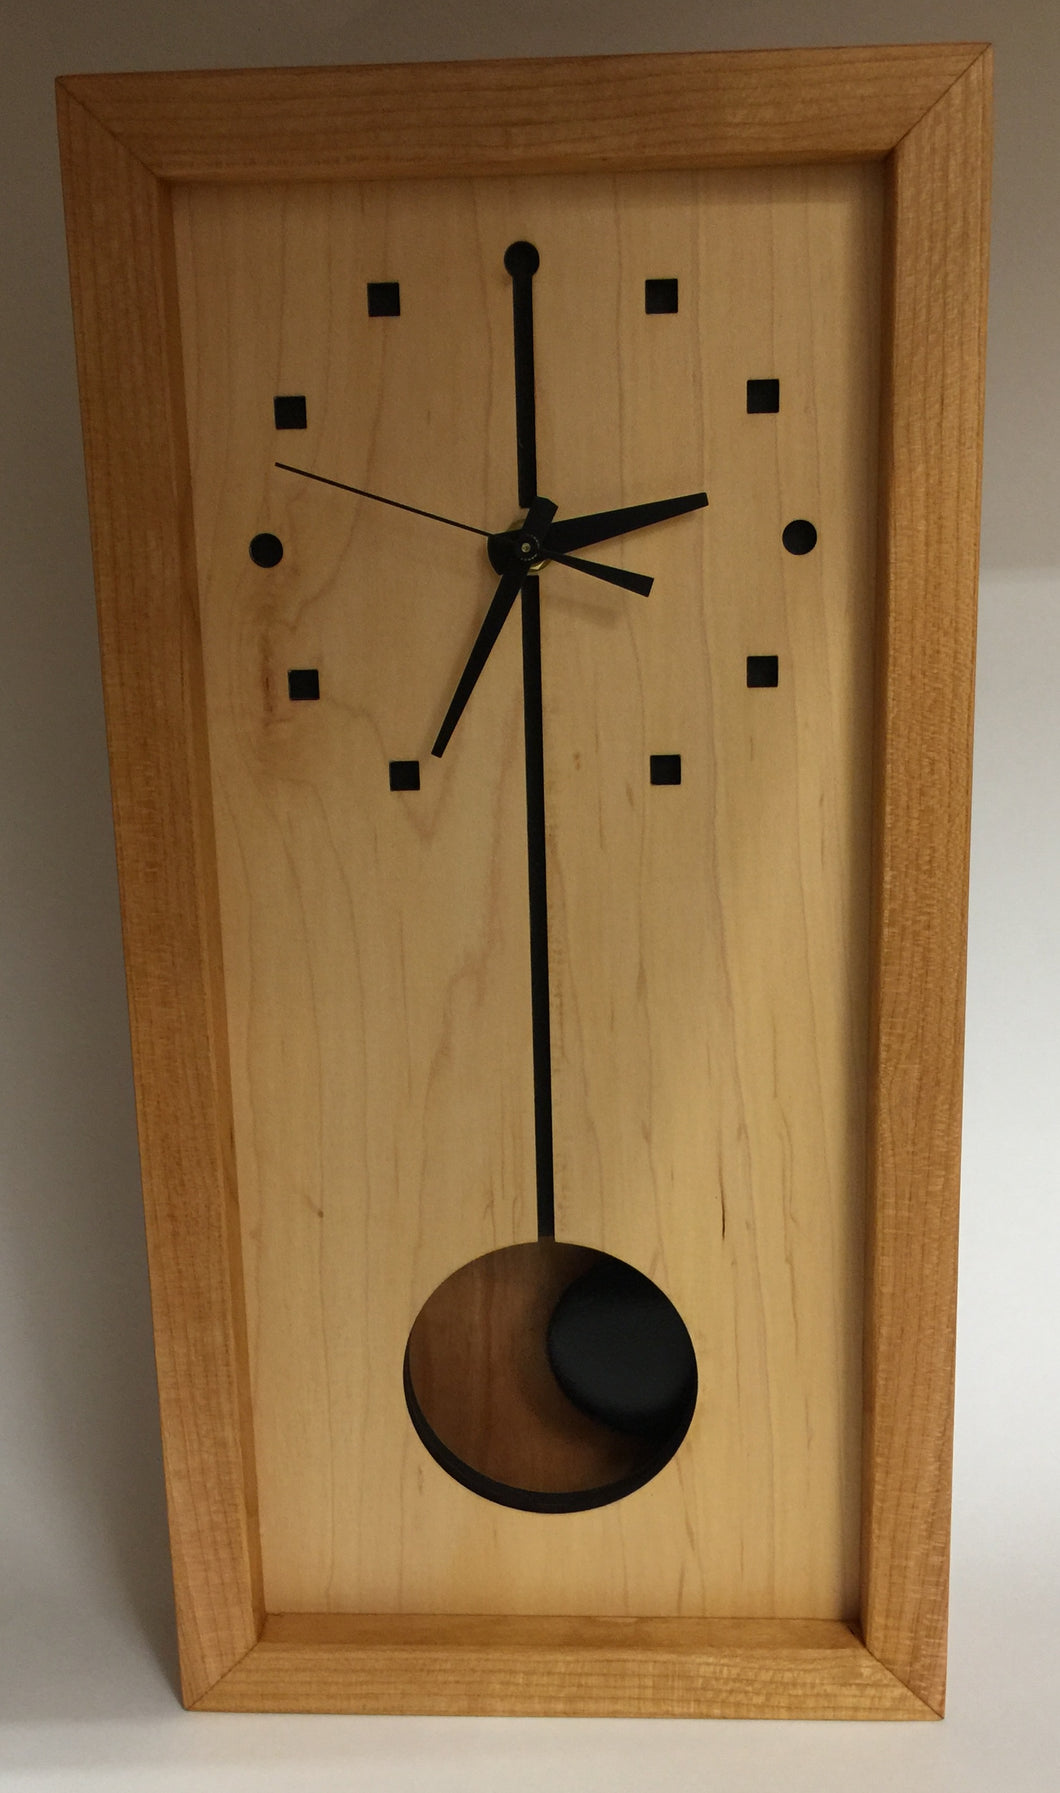 Clock, Tall Box Cherry Sq/Circle Maple